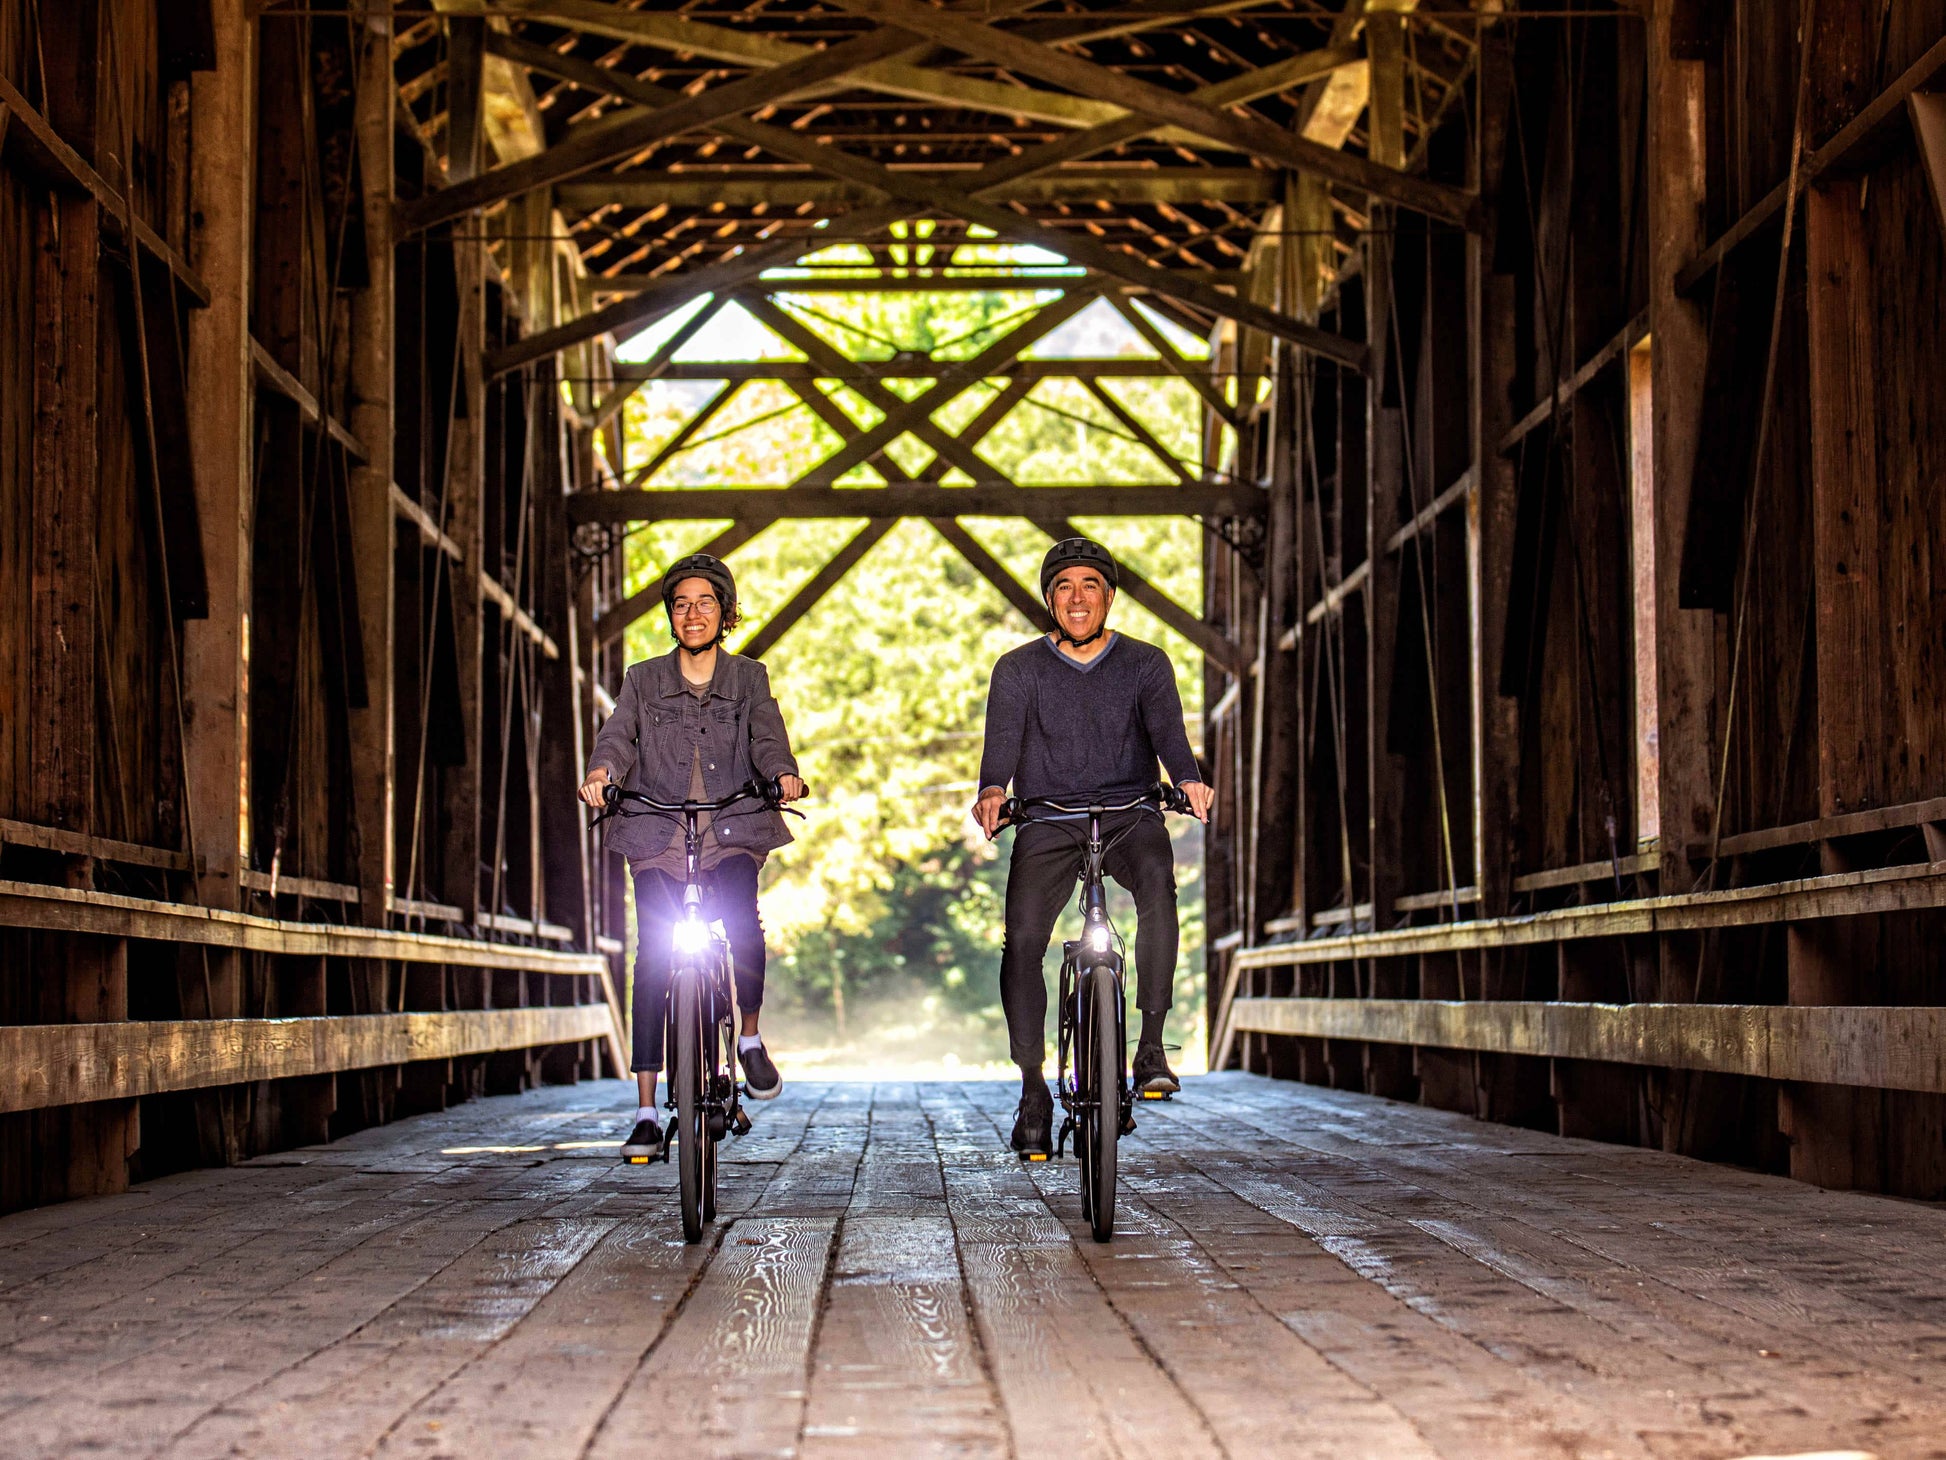 Gazelle Arroyo C7 emtb action photo couple riding covered bridge bike path